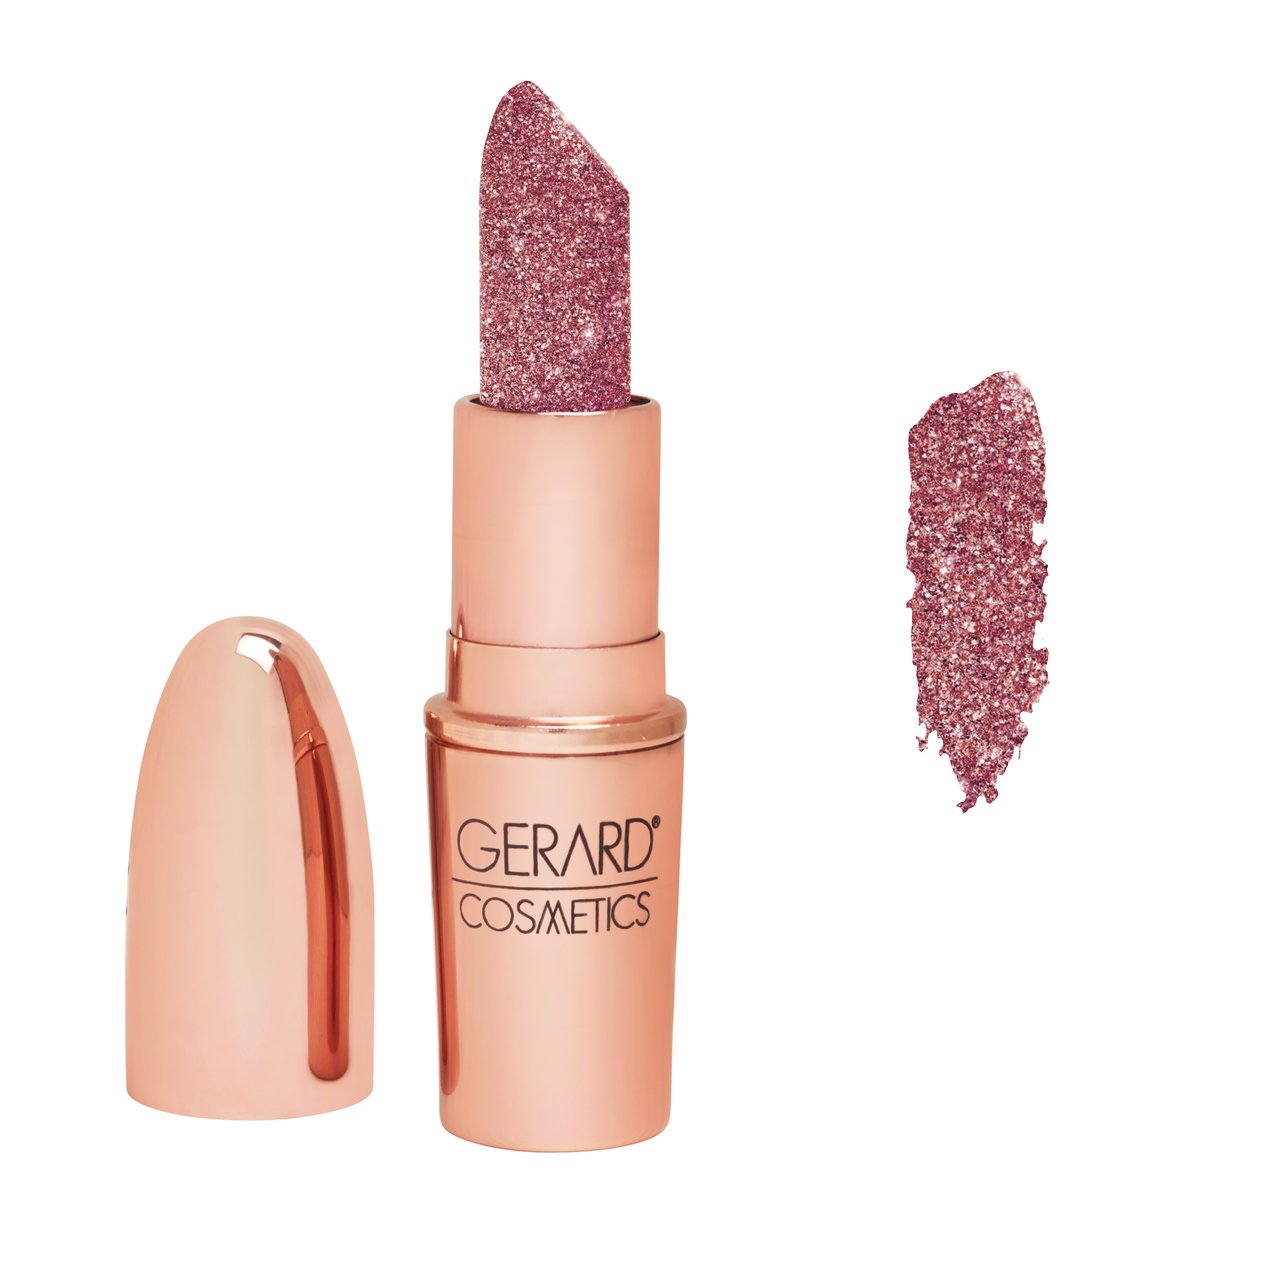 GERARD COSMETICS Glitter Lipstick - Swipe Right